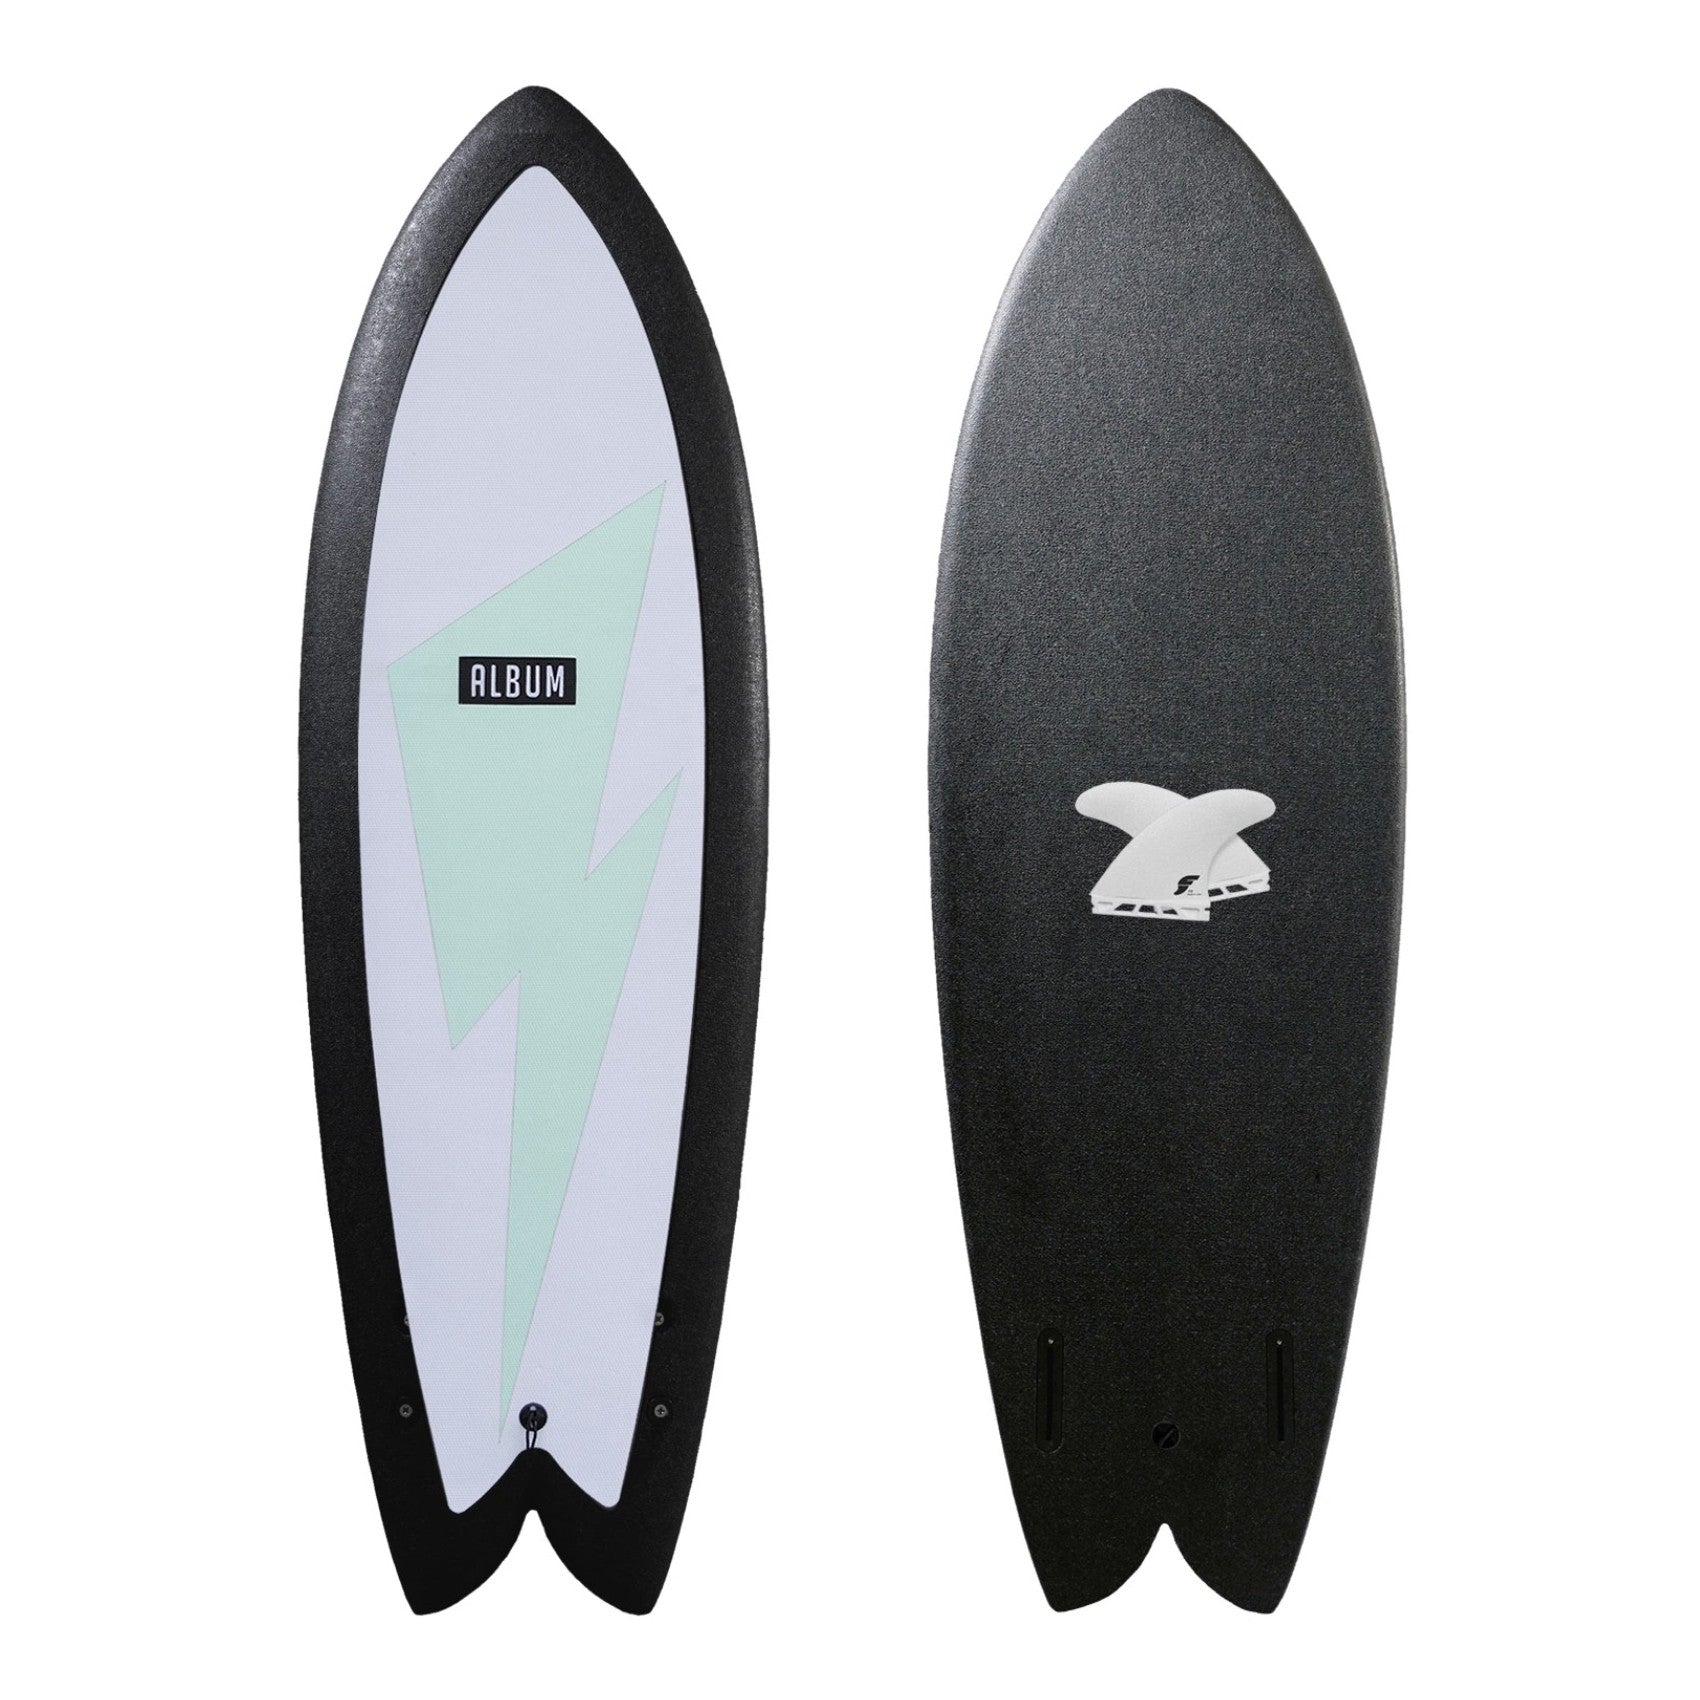 ALBUM Surfboards - Presto Fish 5'7 Soft Top - Electric Cloud